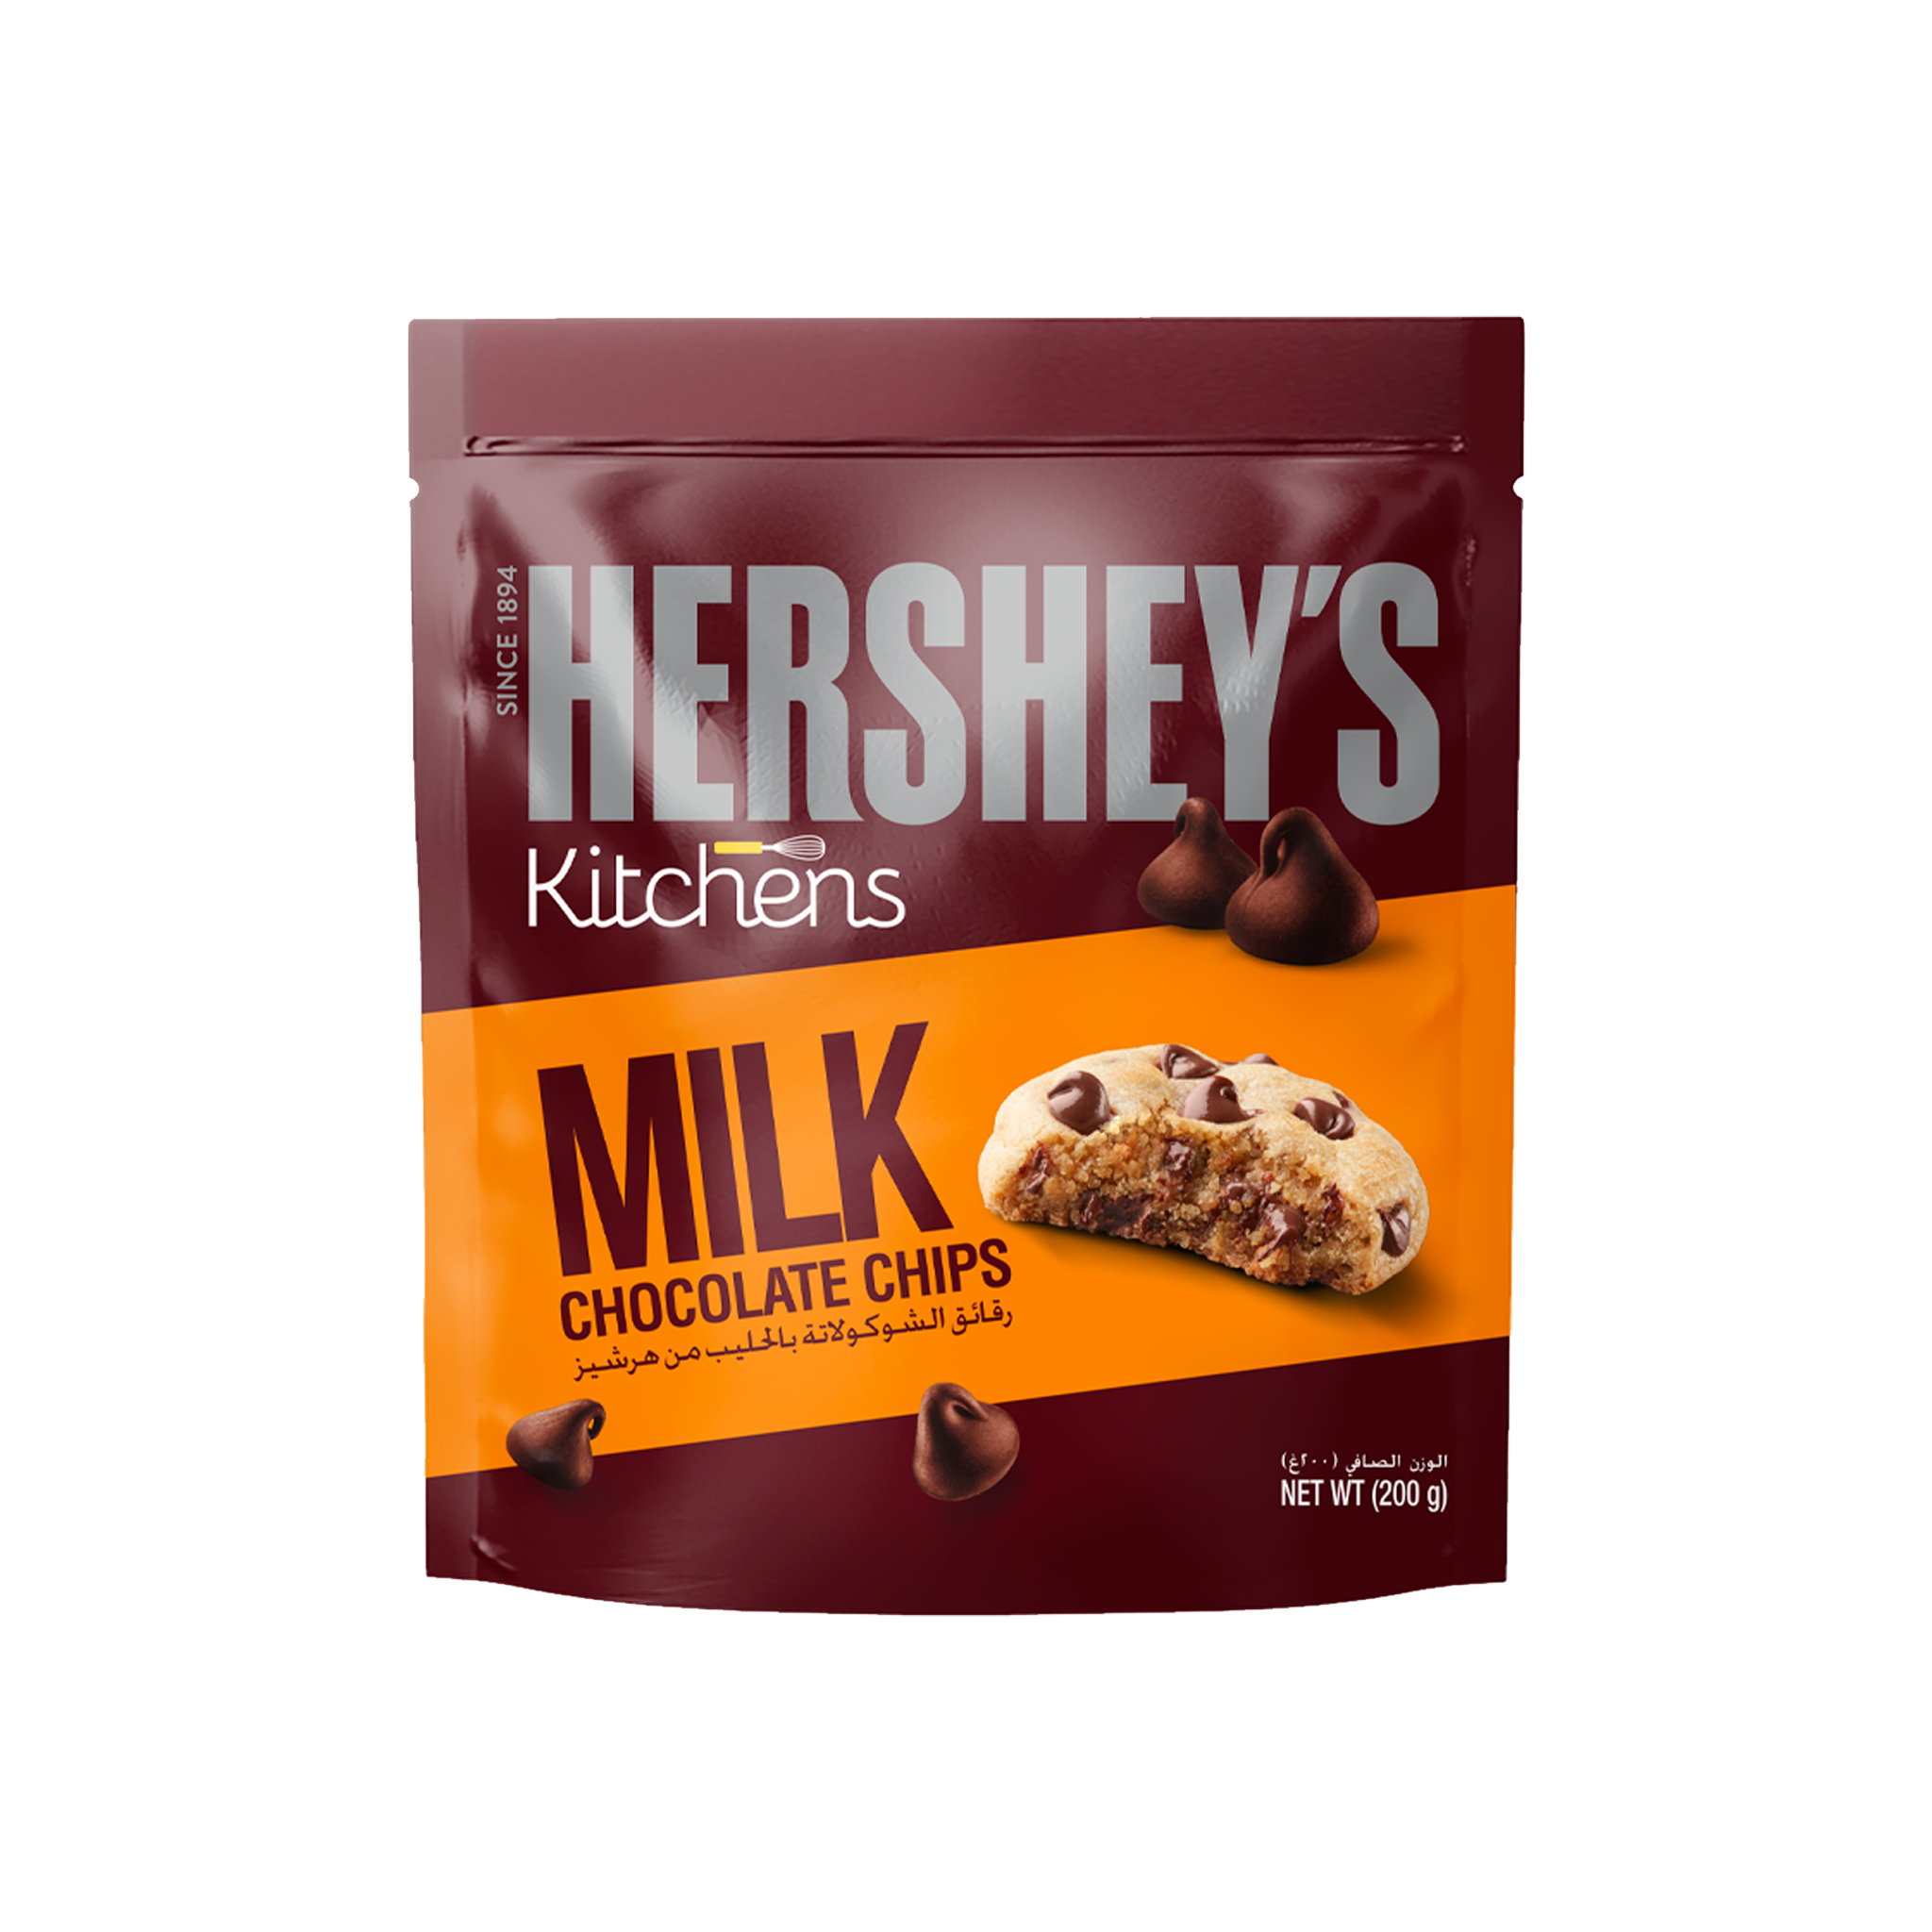 Hersheys Kitchen Milk Chocolate Chips 200g